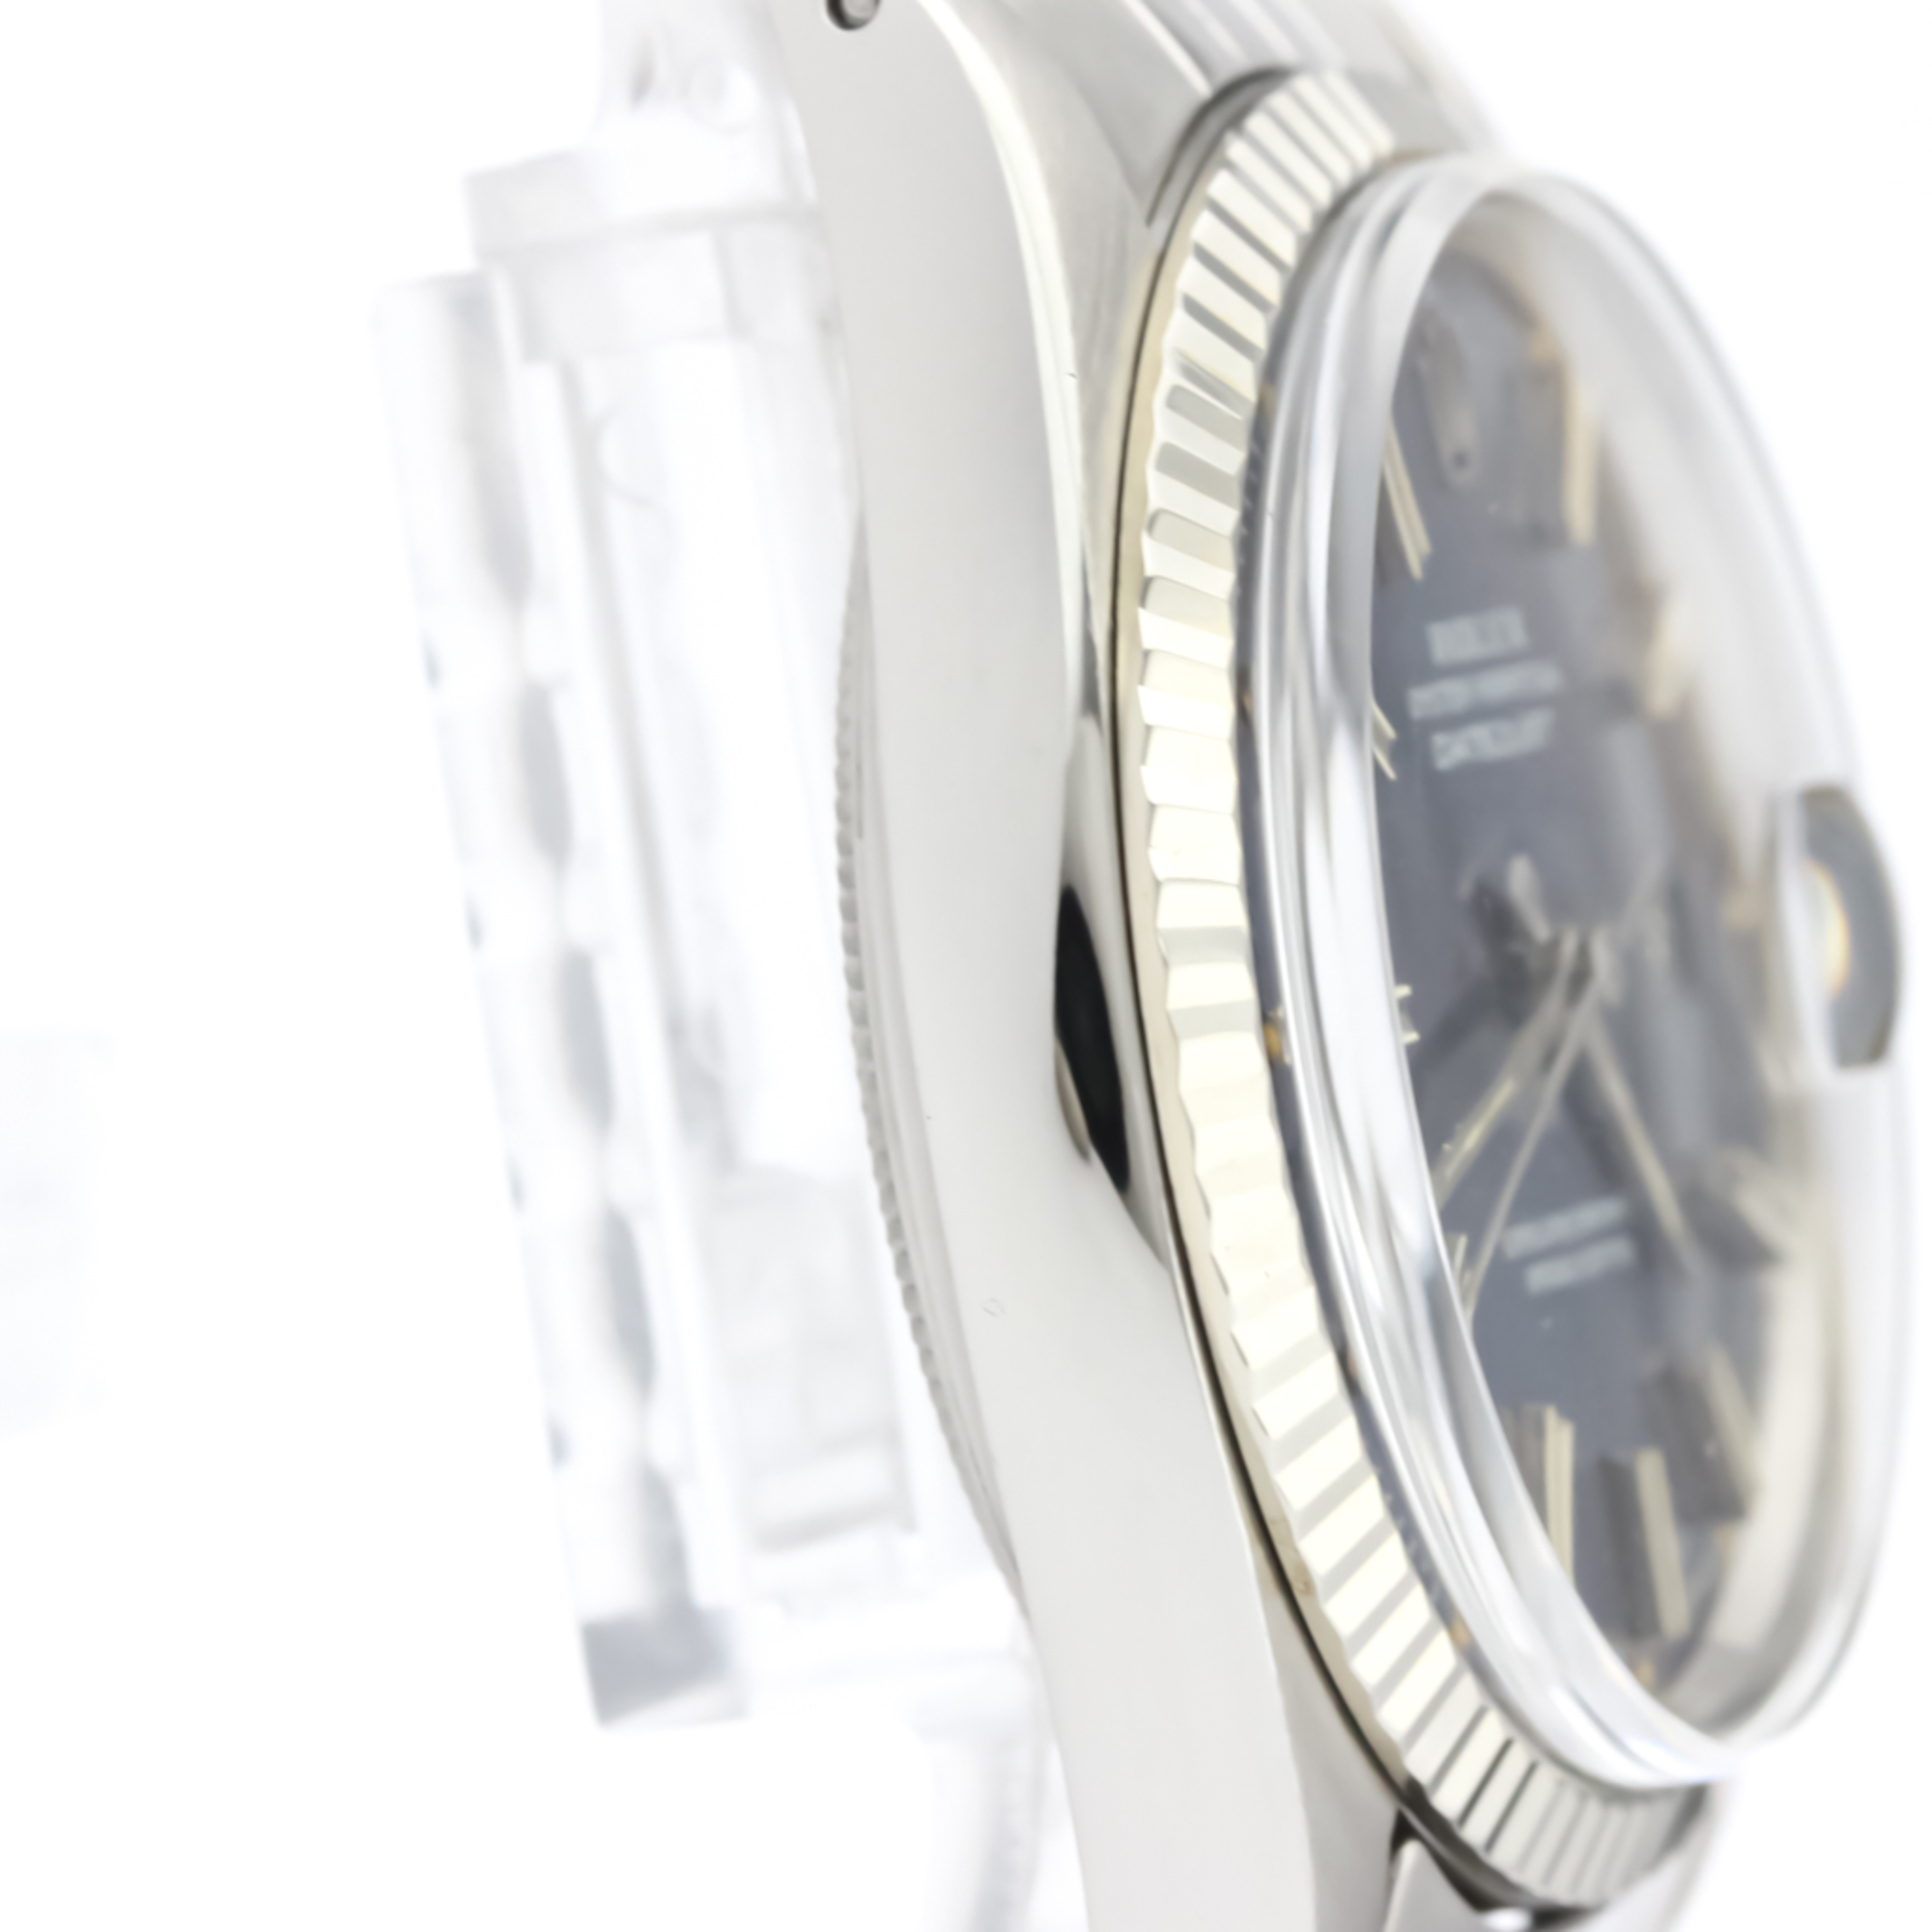 Vintage ROLEX Datejust 1601 White Gold Steel Automatic Mens Watch